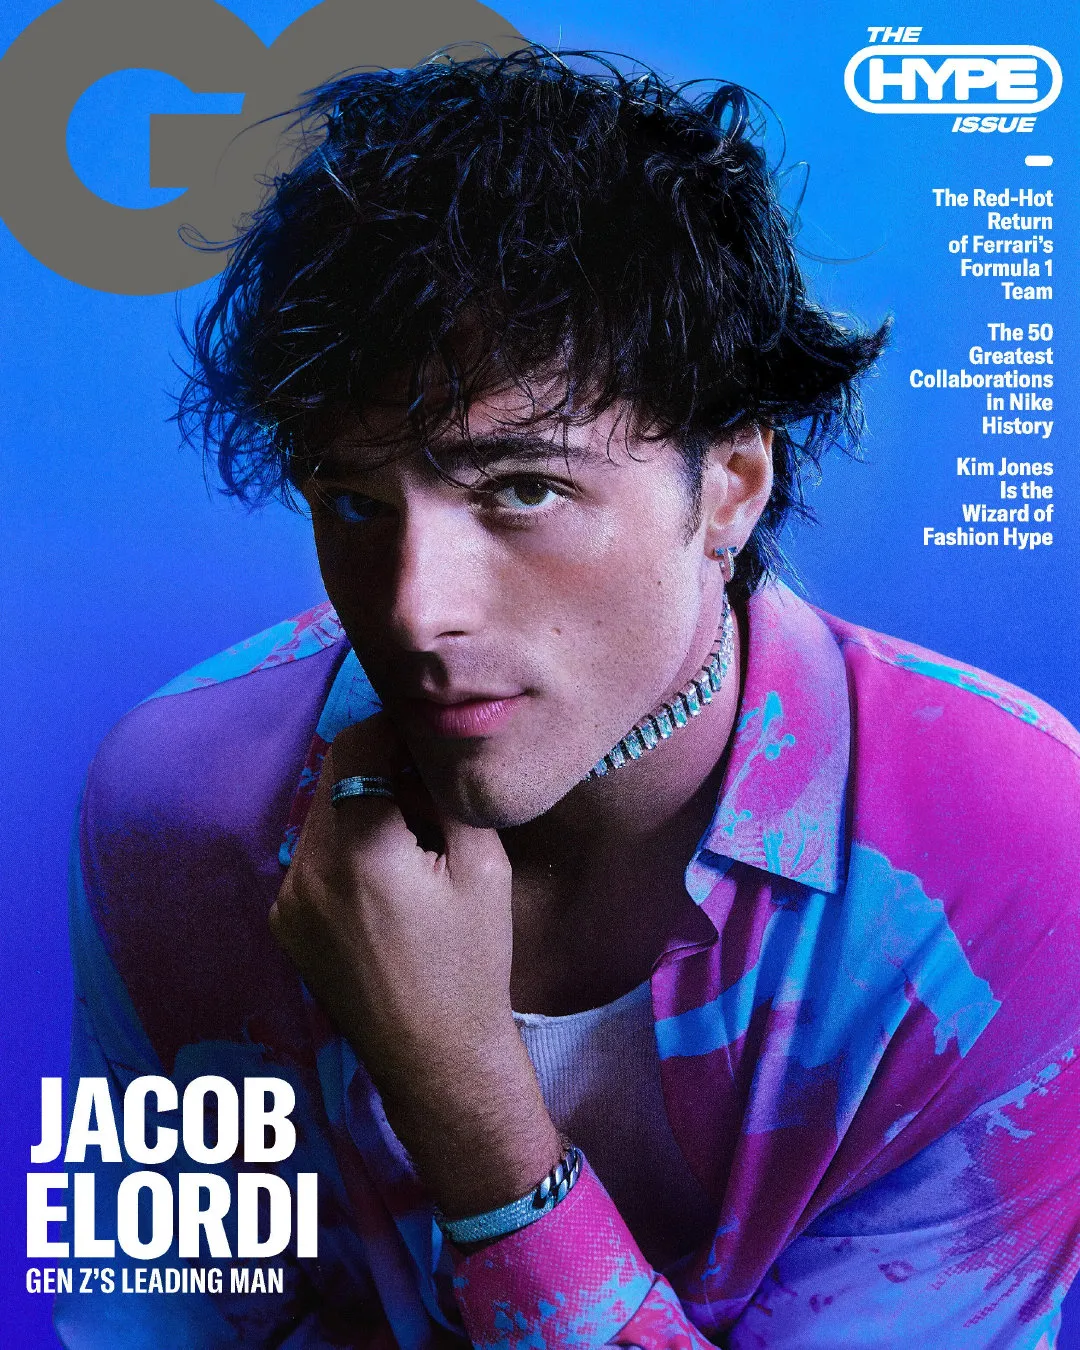 Jacob Elordi, "GQ" magazine September issue photo | FMV6